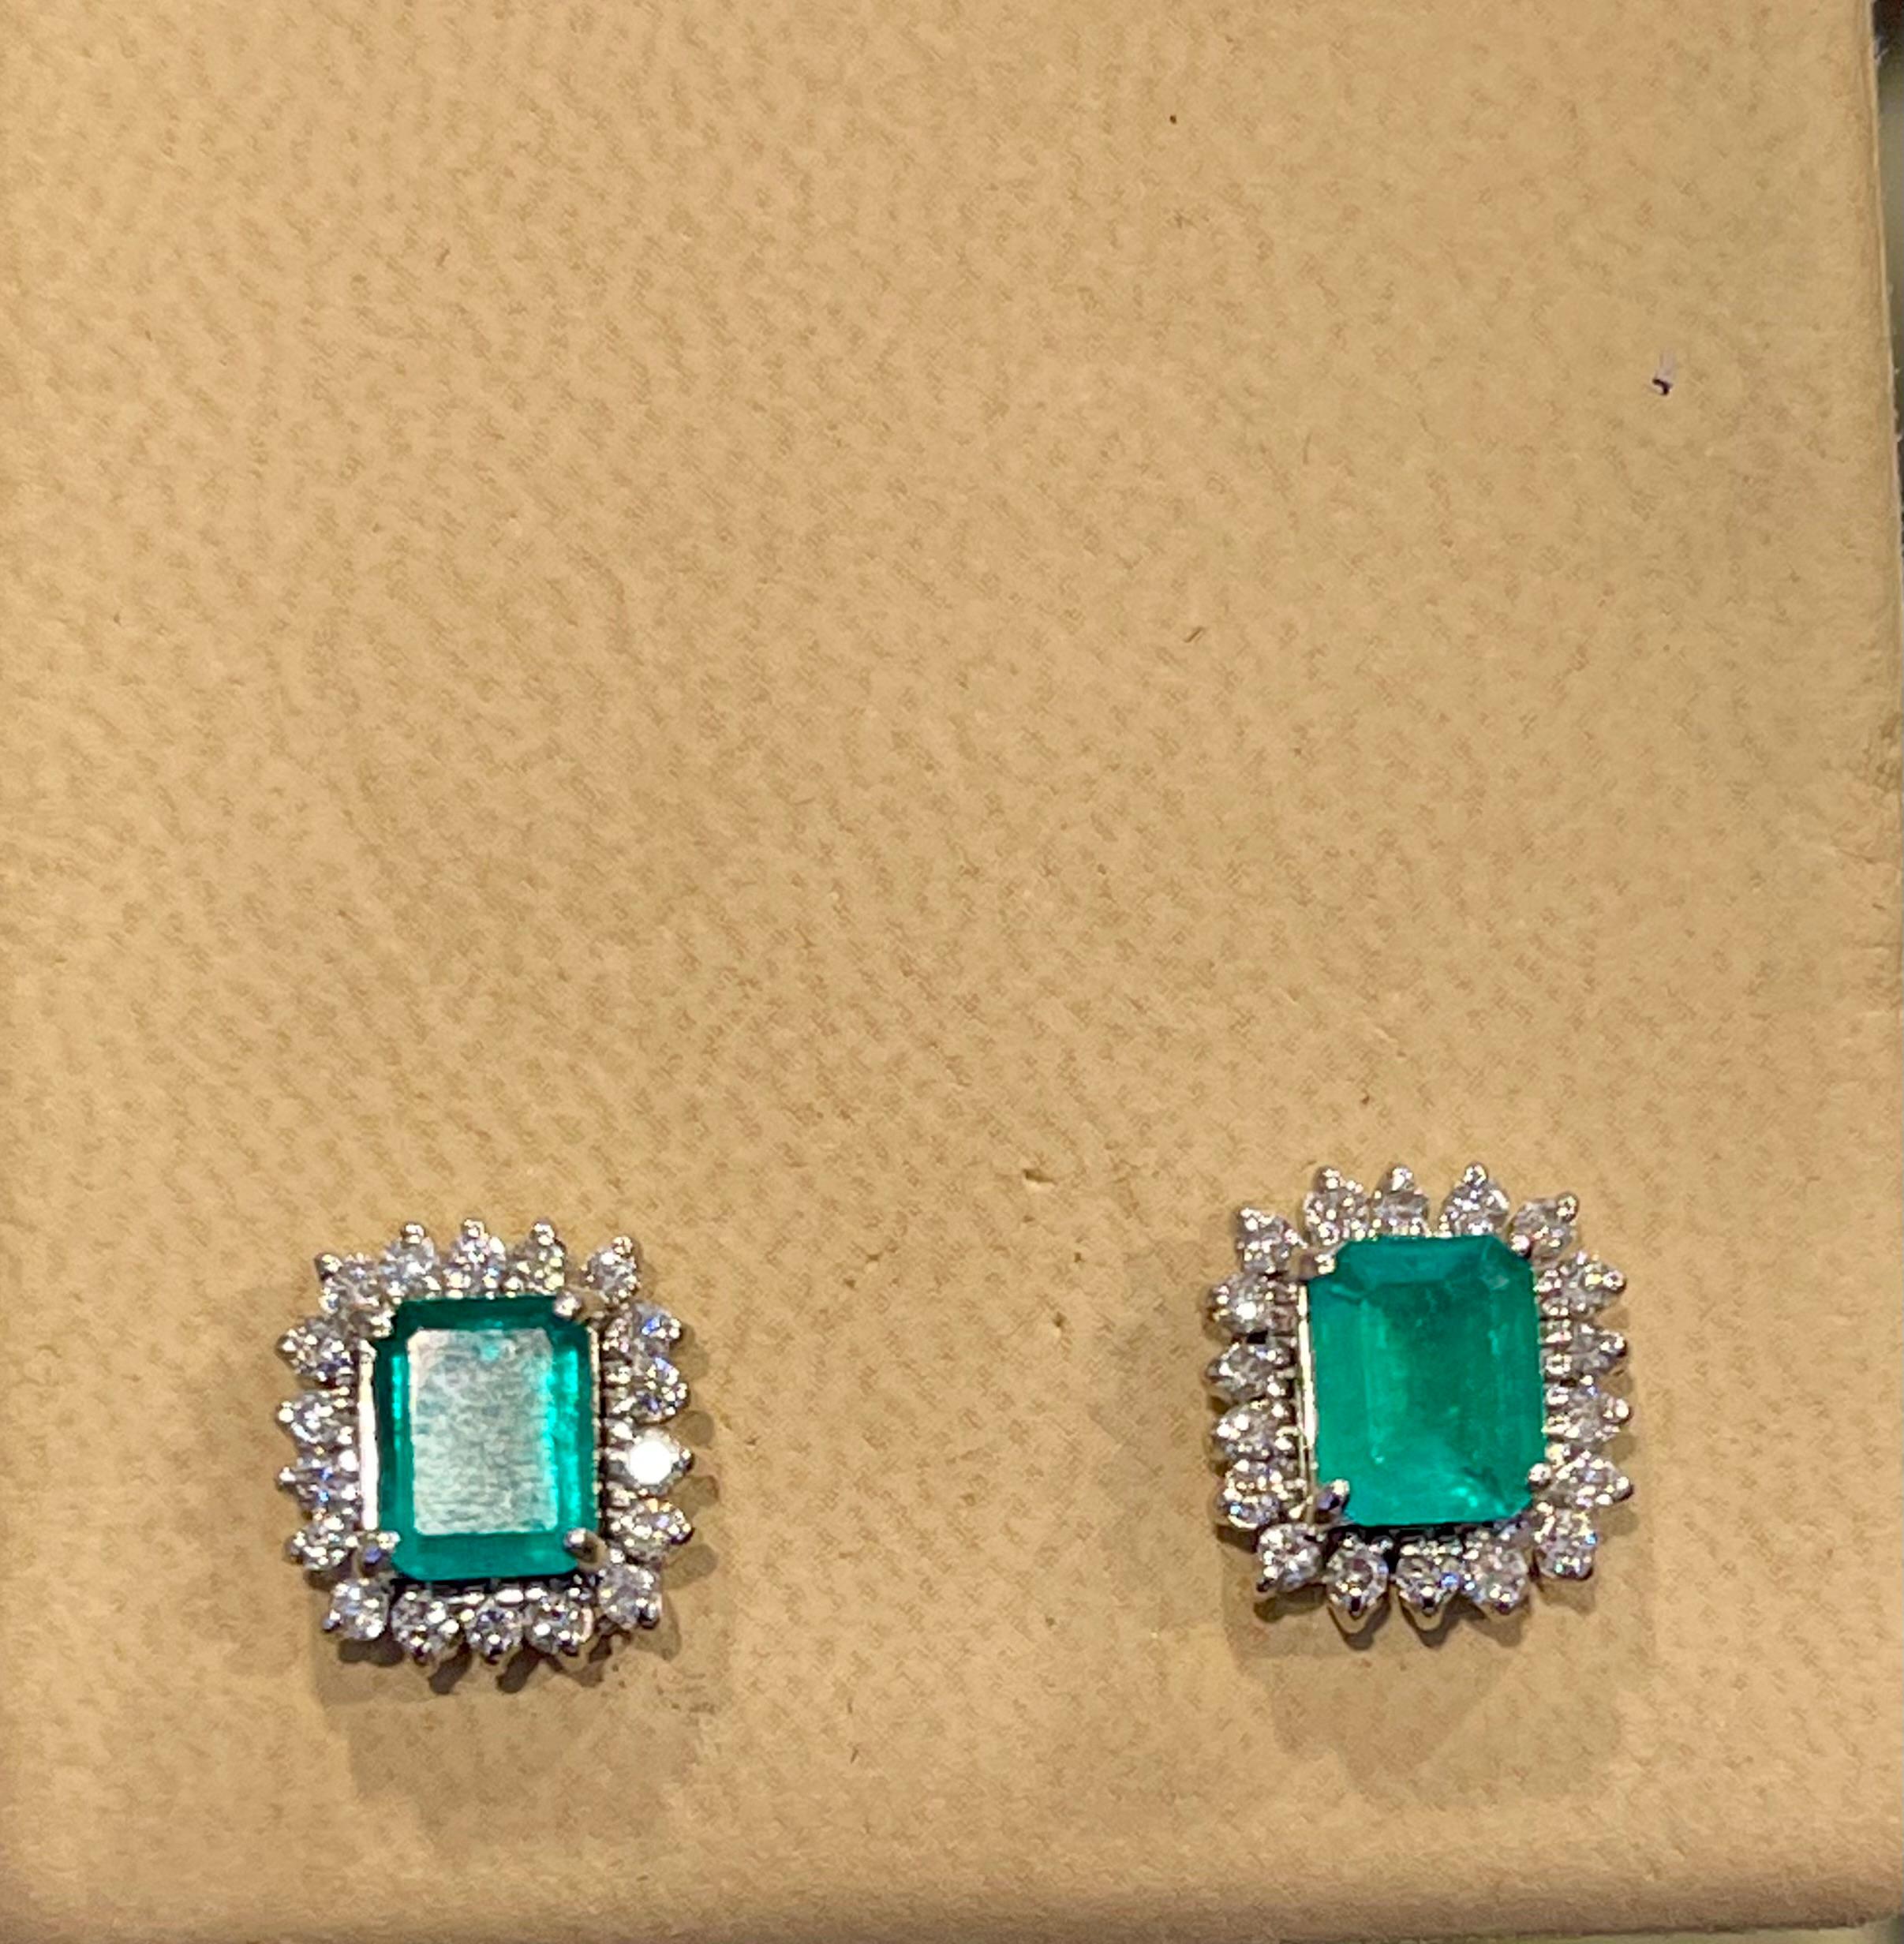 2. 25 Ct Colombian Emerald Cut Emerald & Diamond Earrings 18 Karat White Gold 8